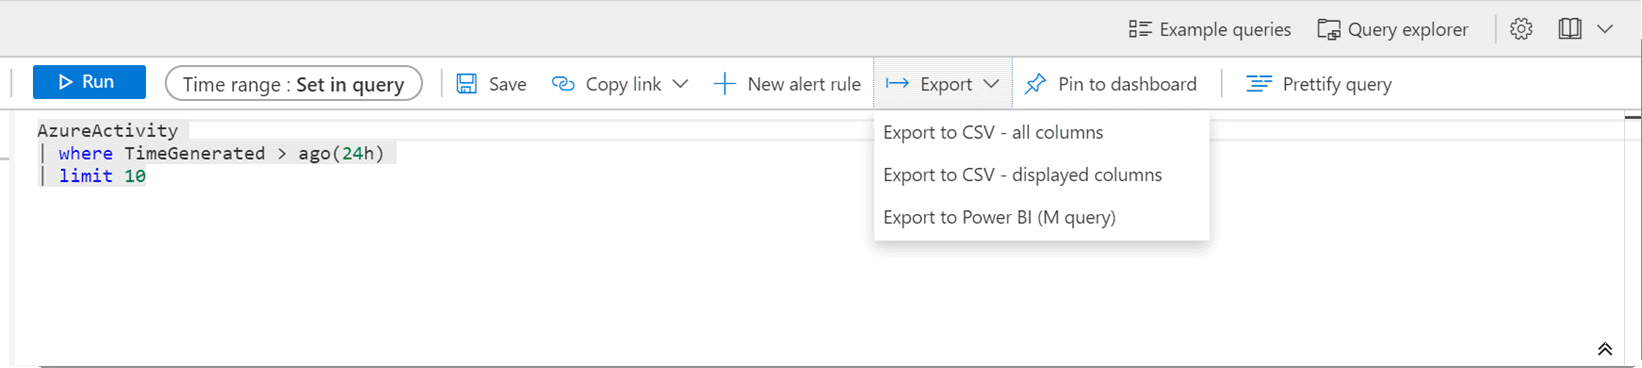 Log Analytics query showing export option menu pulldown